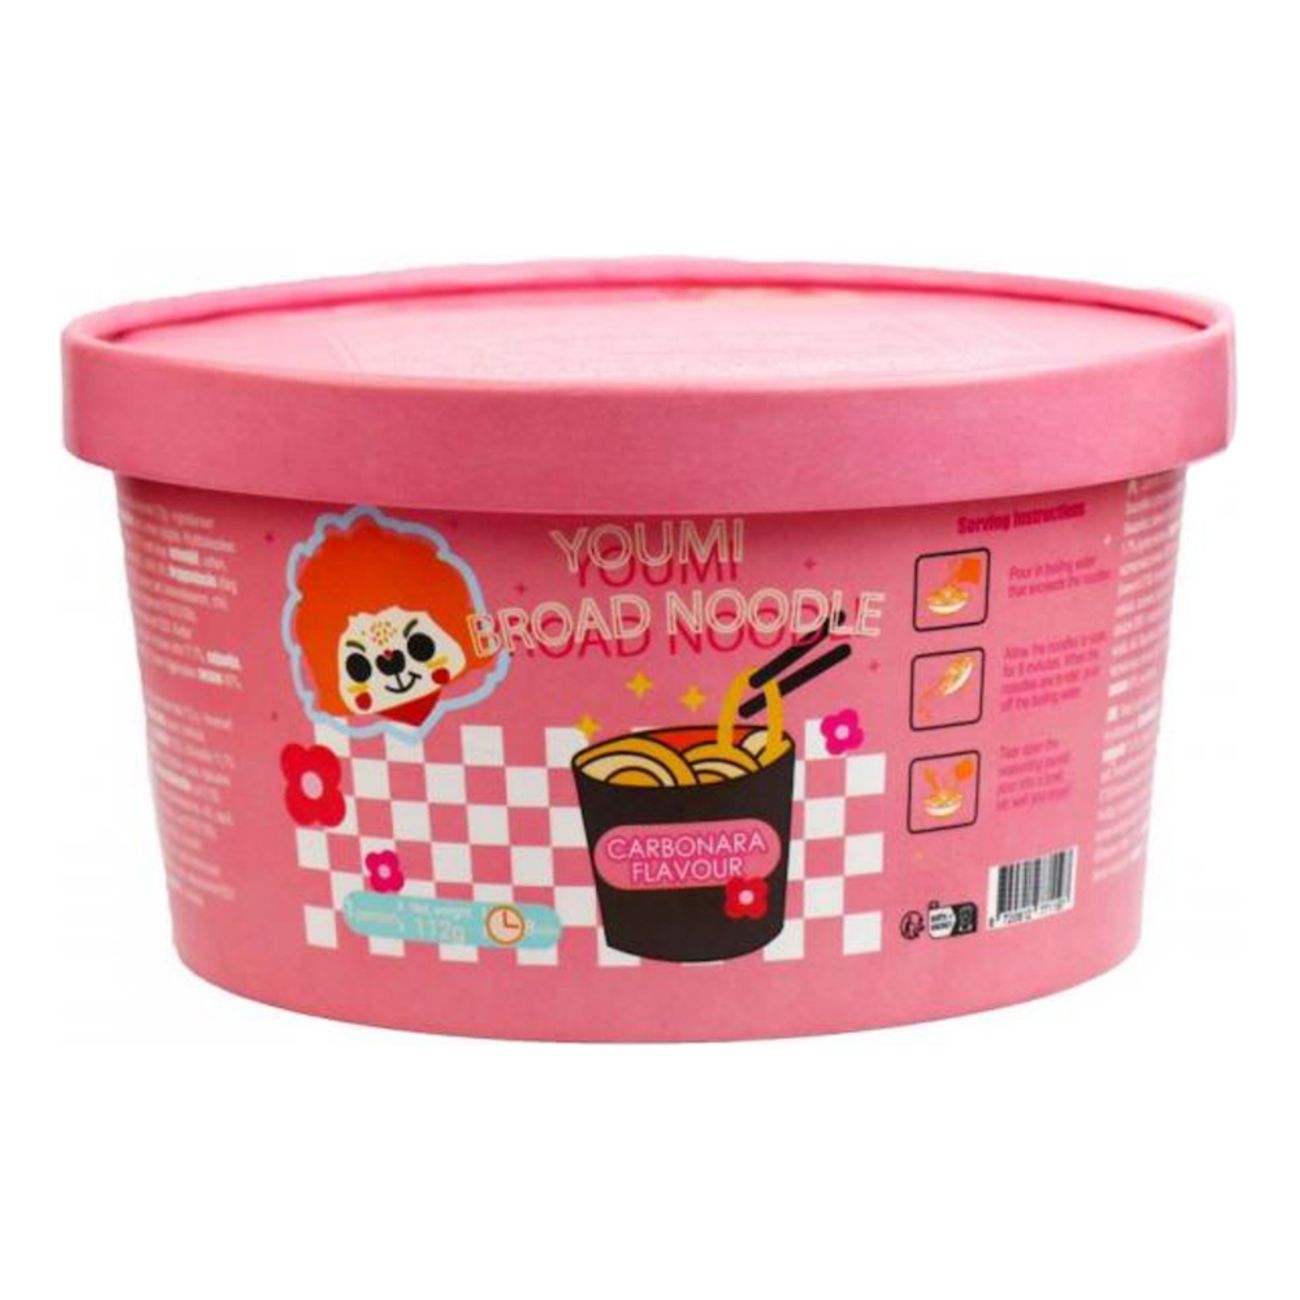 youmi-instant-broad-noodle-carbonara-flavour-100882-1